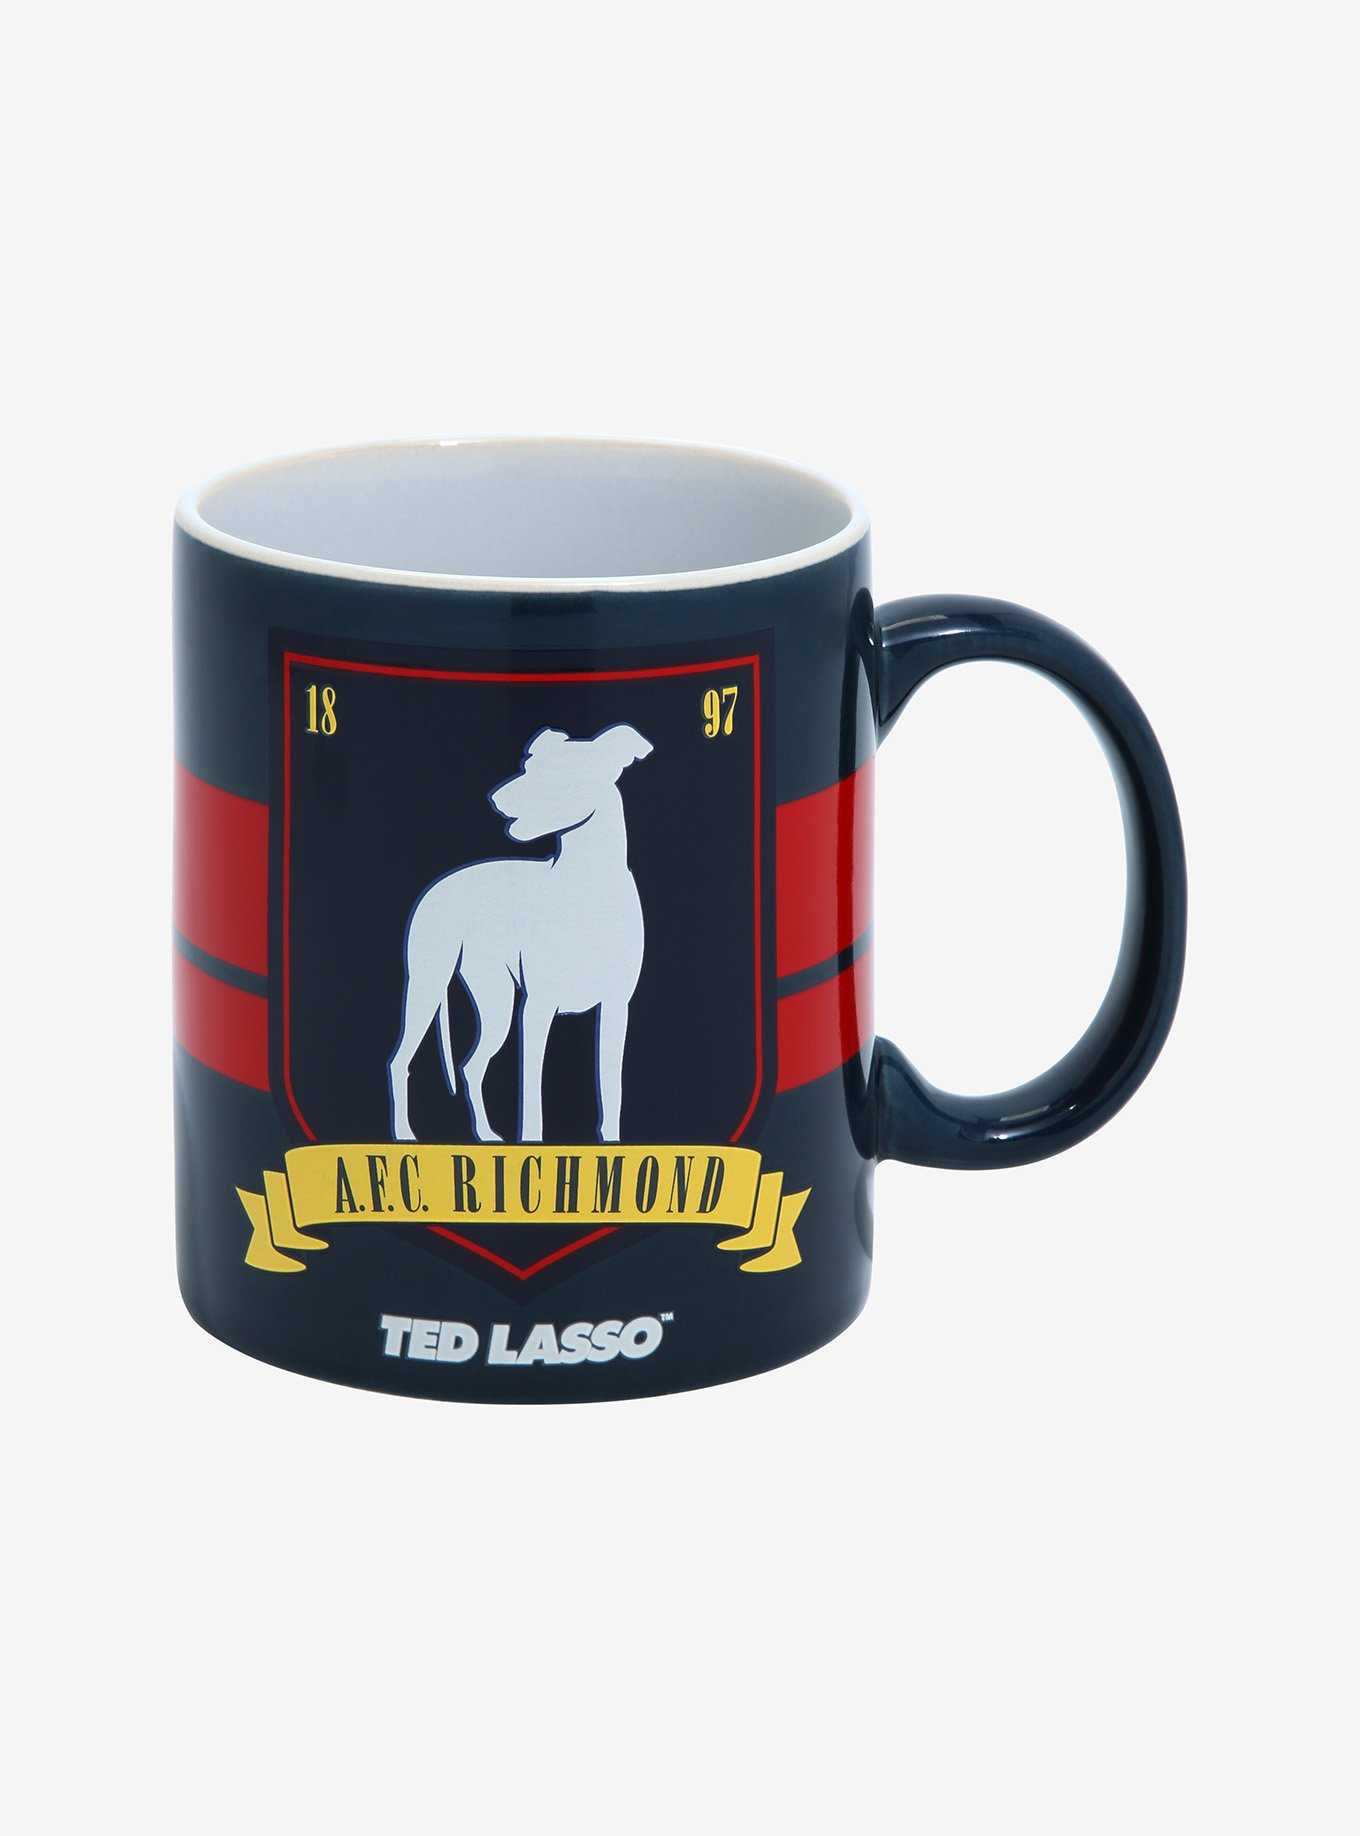 Ted Lasso A.F.C. Richmond Logo Mug, , hi-res